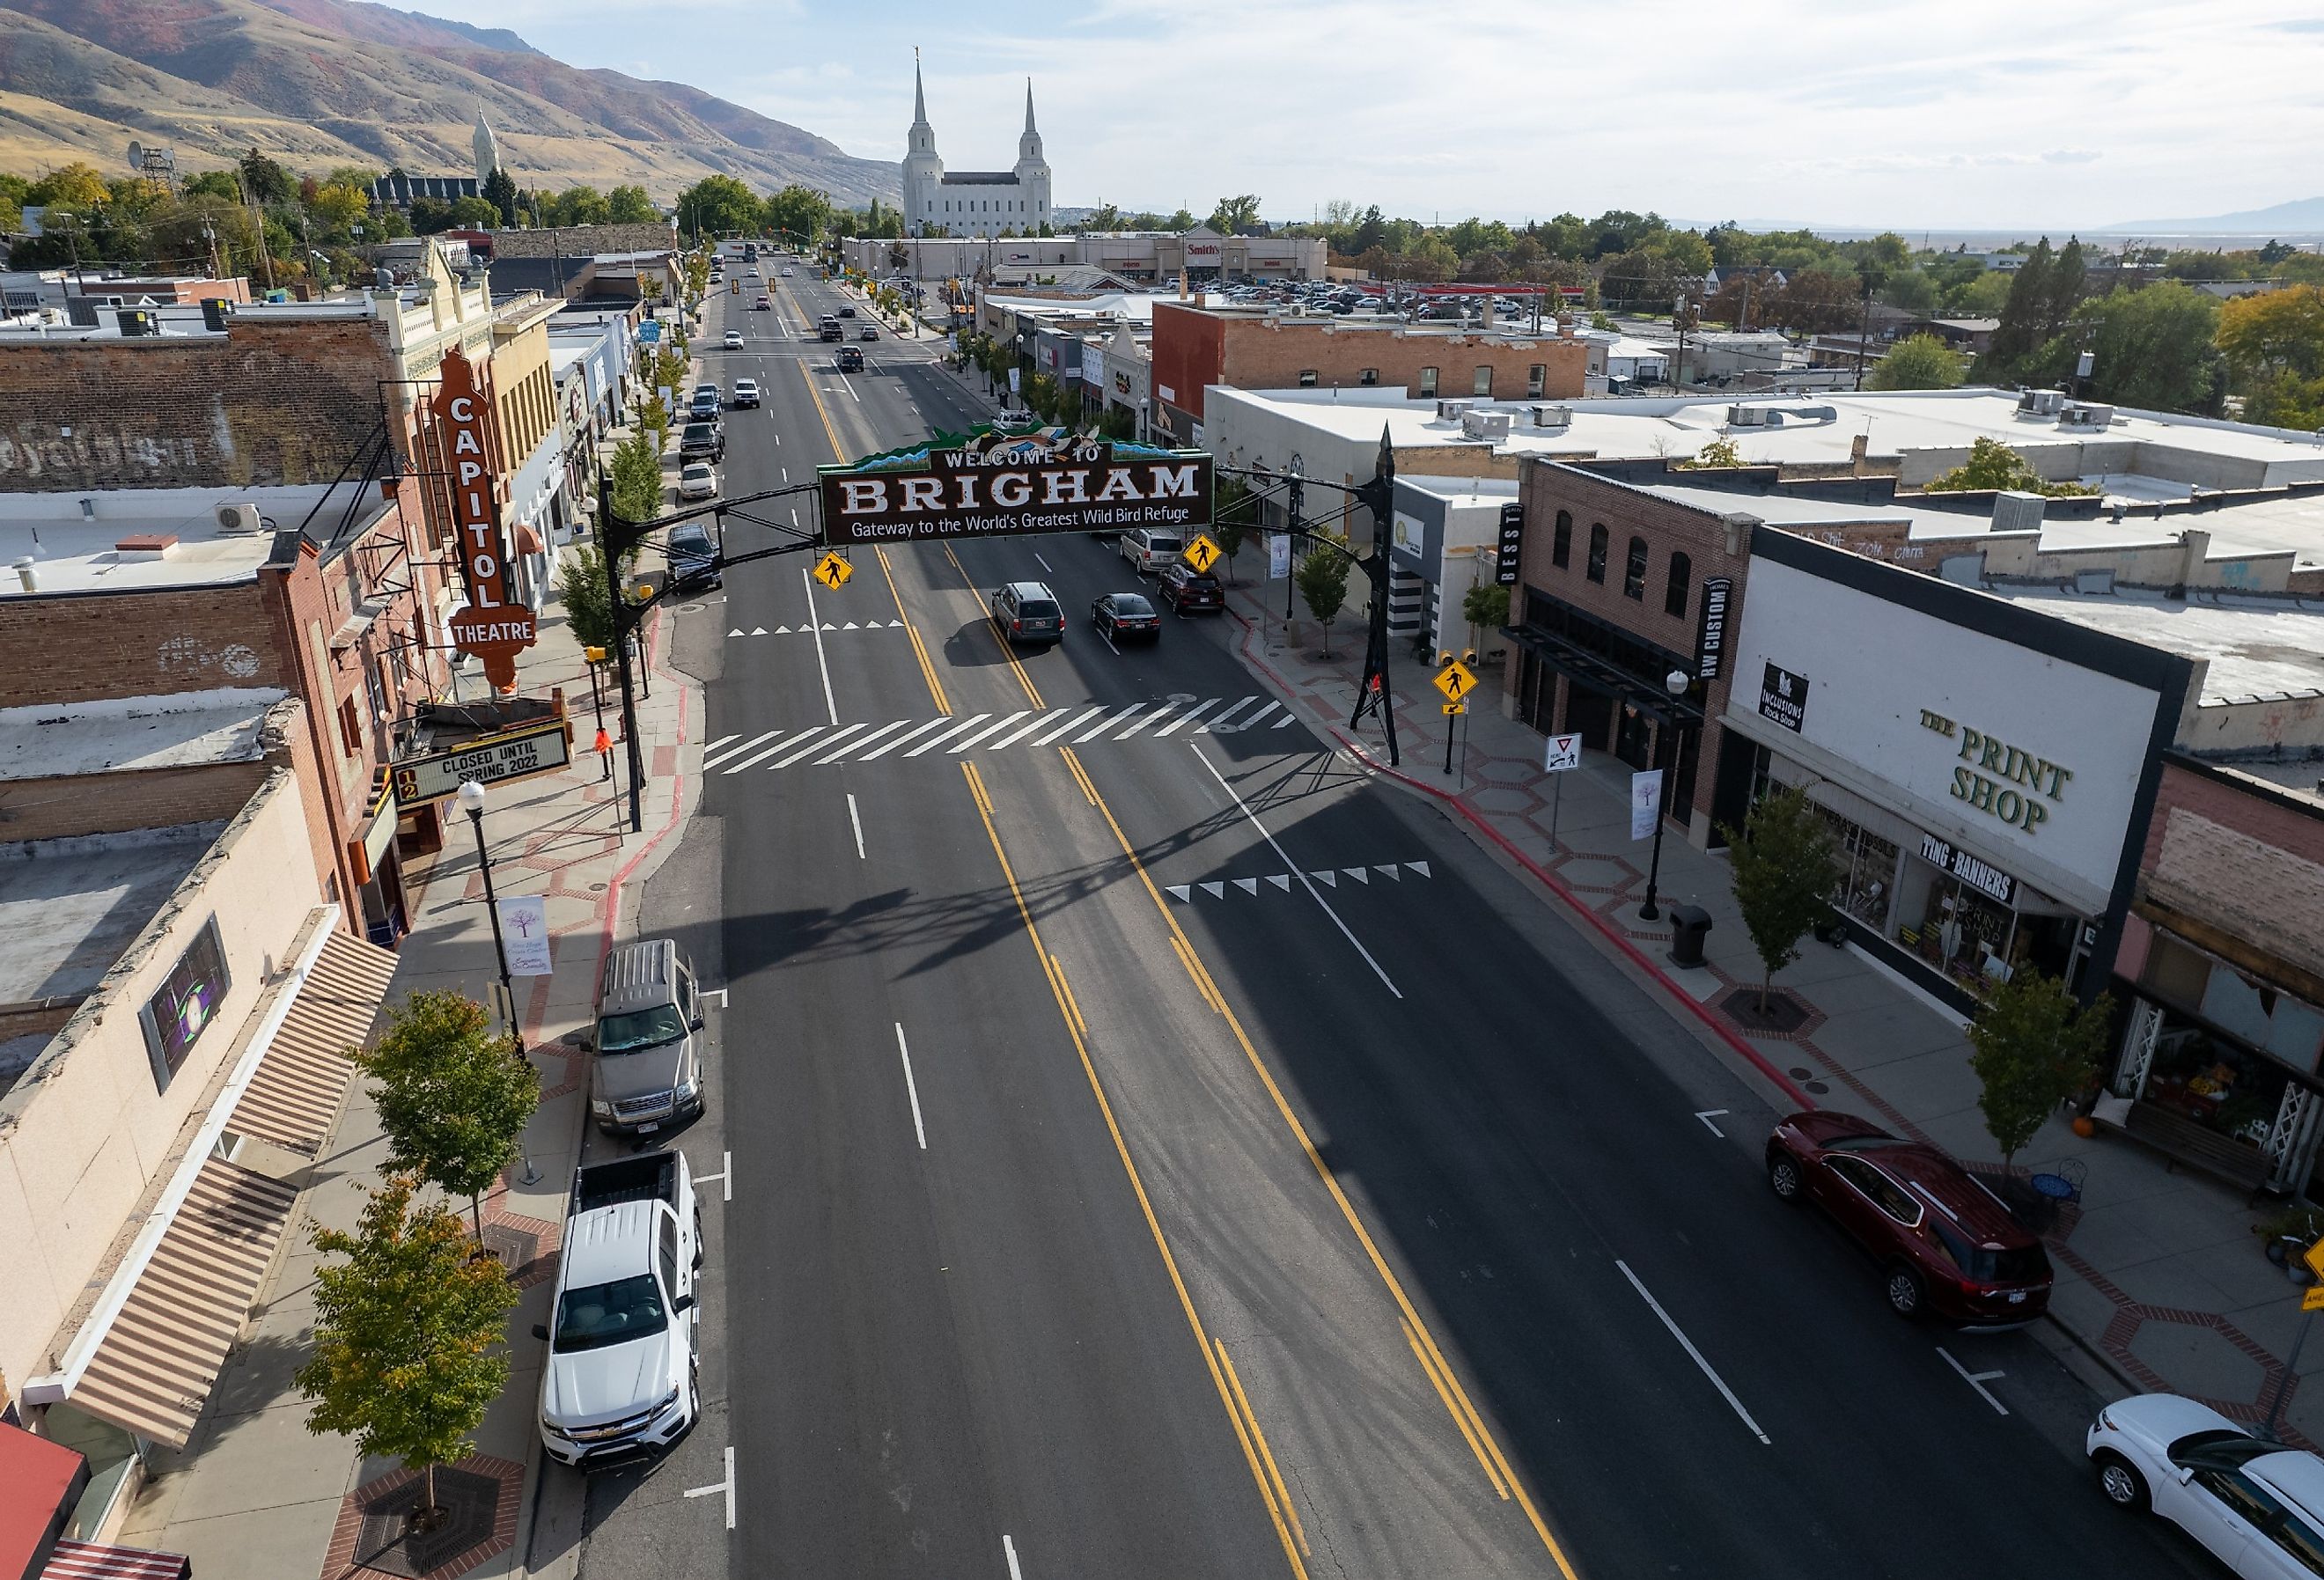 Overlooking the main street of Brigham City, Utah. Image credit Charles E Uibel via Shutterstock